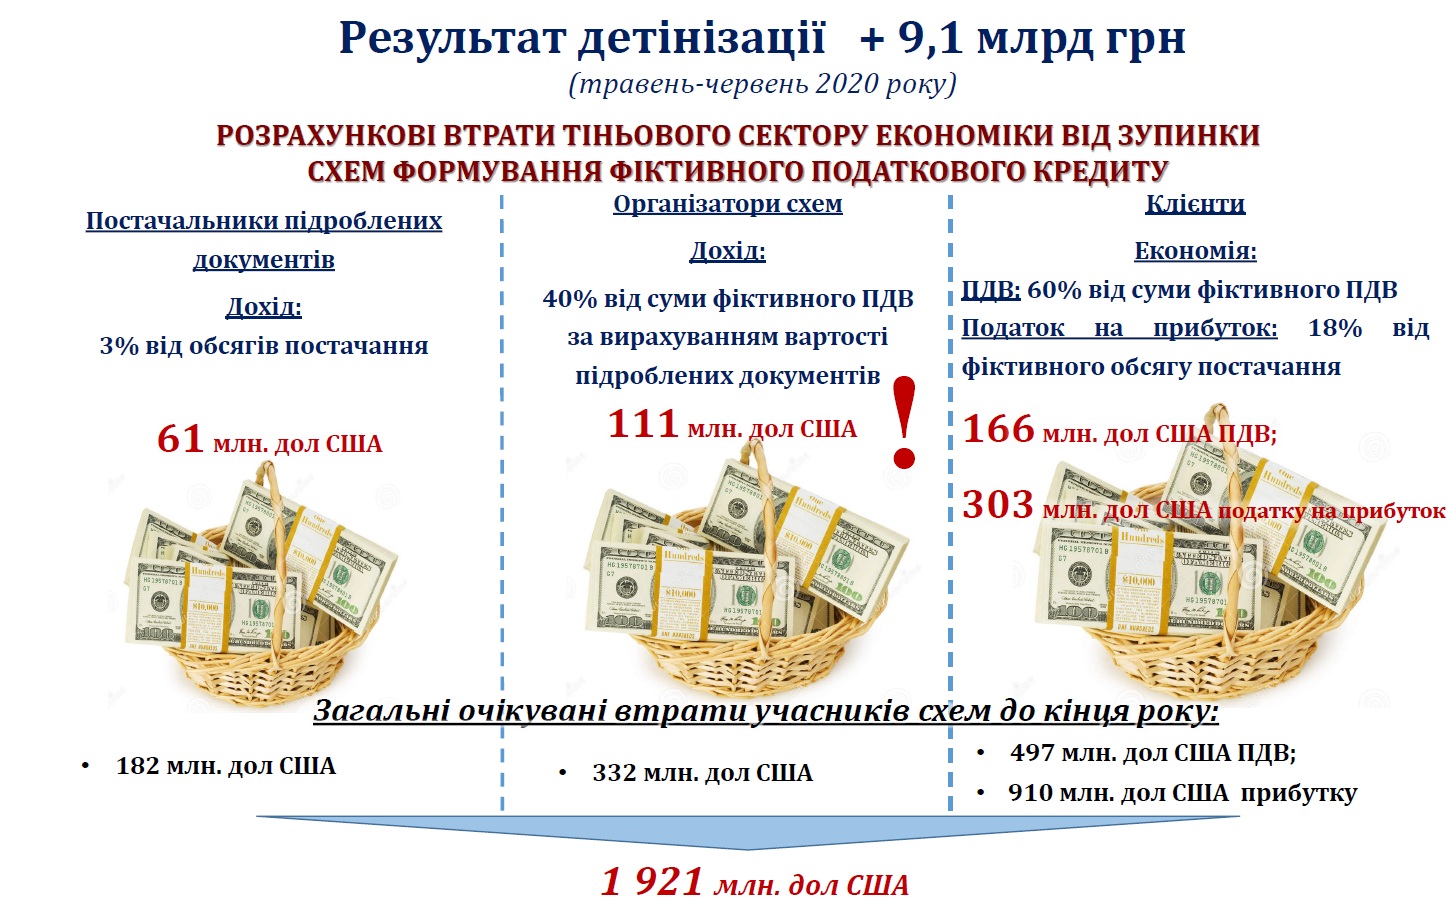 http://tax.gov.ua/data/files/252391.jpg